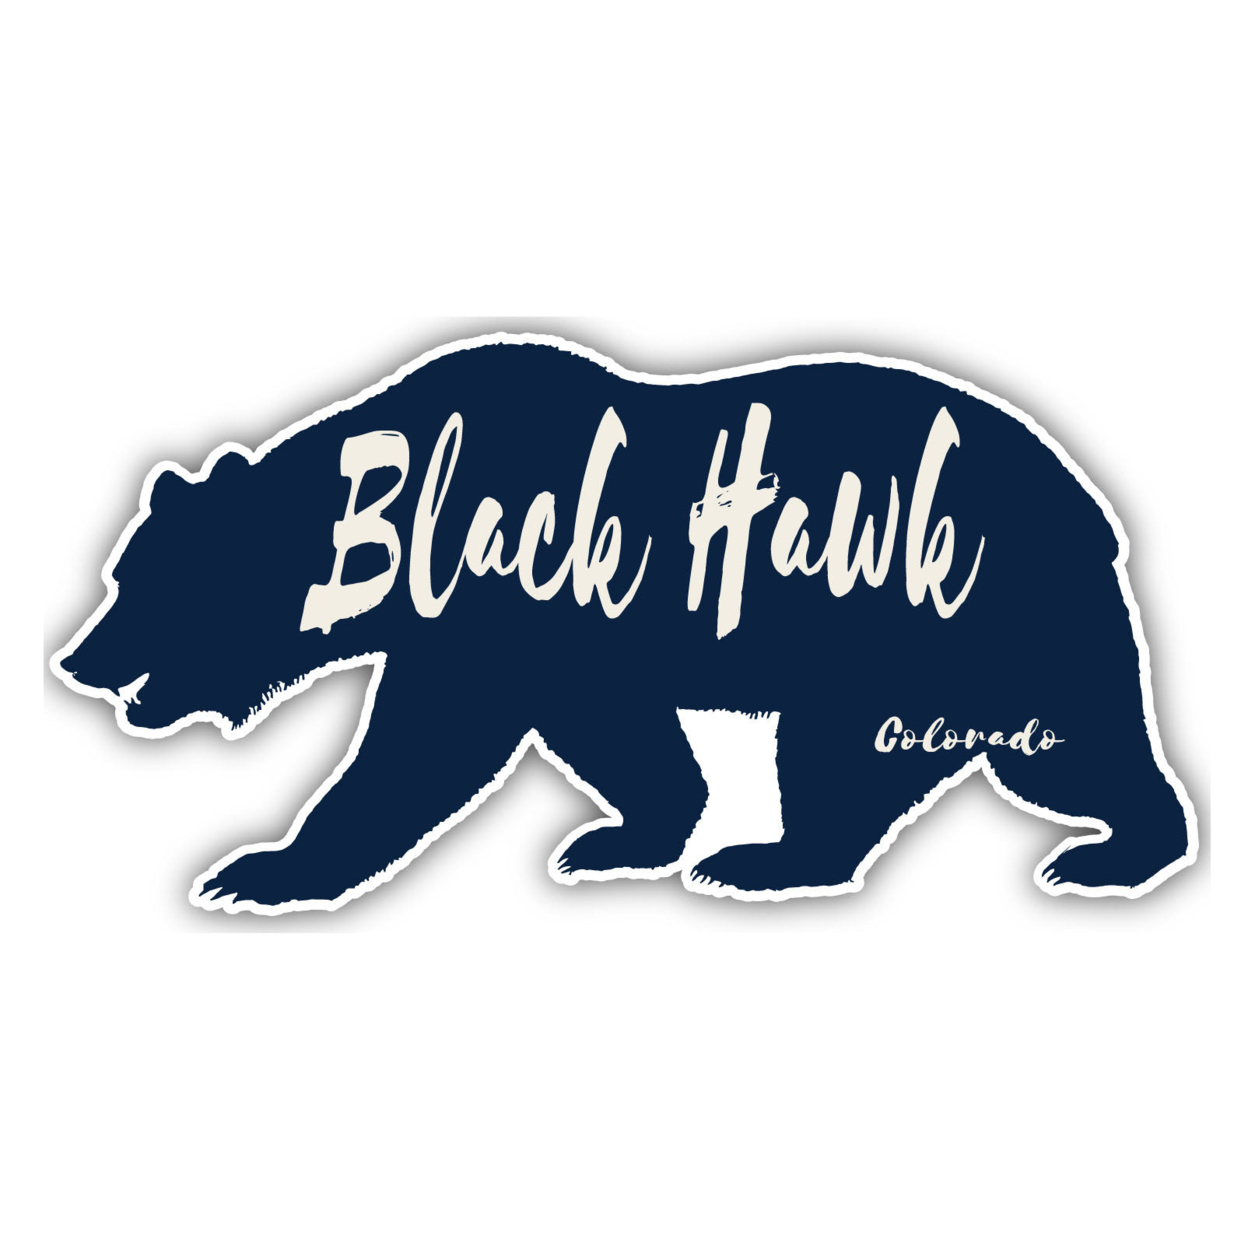 Black Hawk Colorado Souvenir Decorative Stickers (Choose Theme And Size) - 4-Pack, 10-Inch, Tent